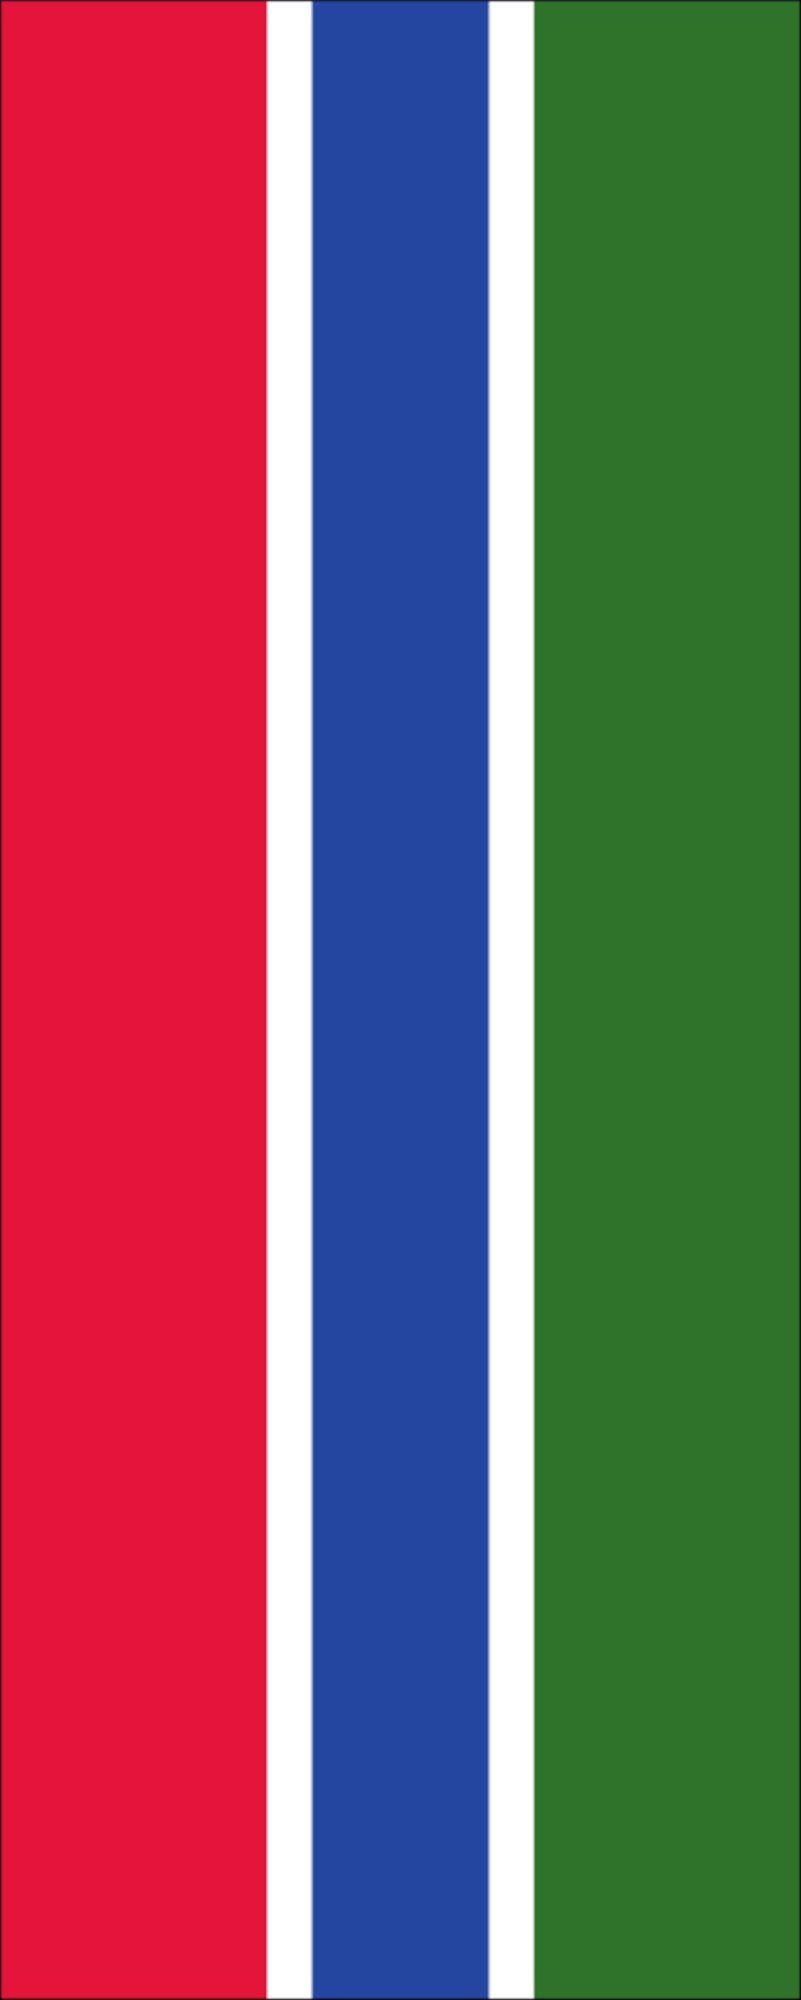 flaggenmeer Flagge Hochformat Gambia g/m² Flagge 110